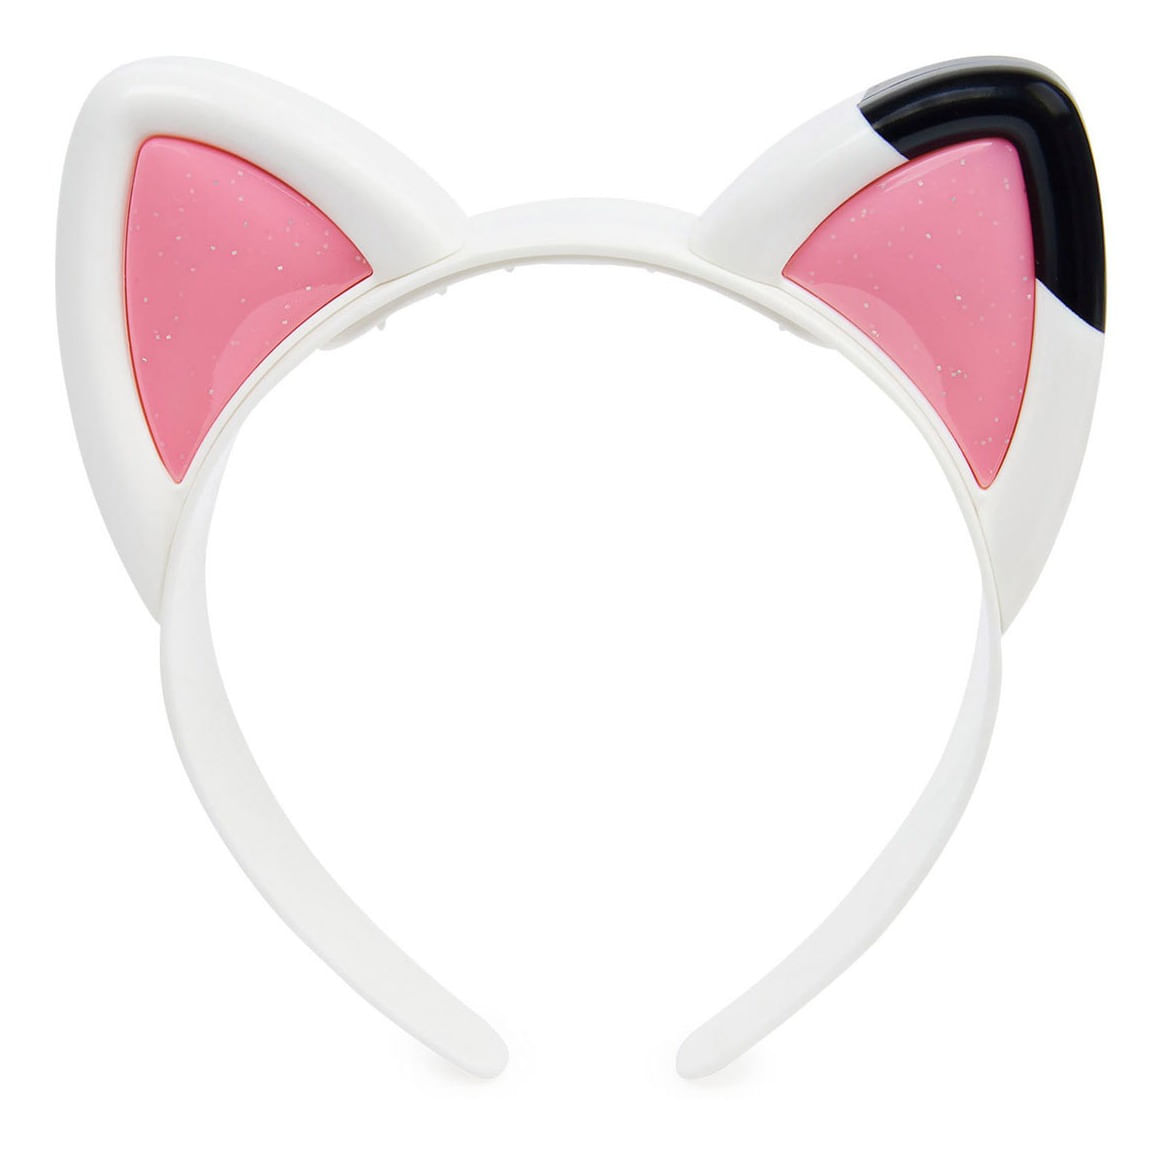 Tiara orelha de gato da gabby  Produtos Personalizados no Elo7